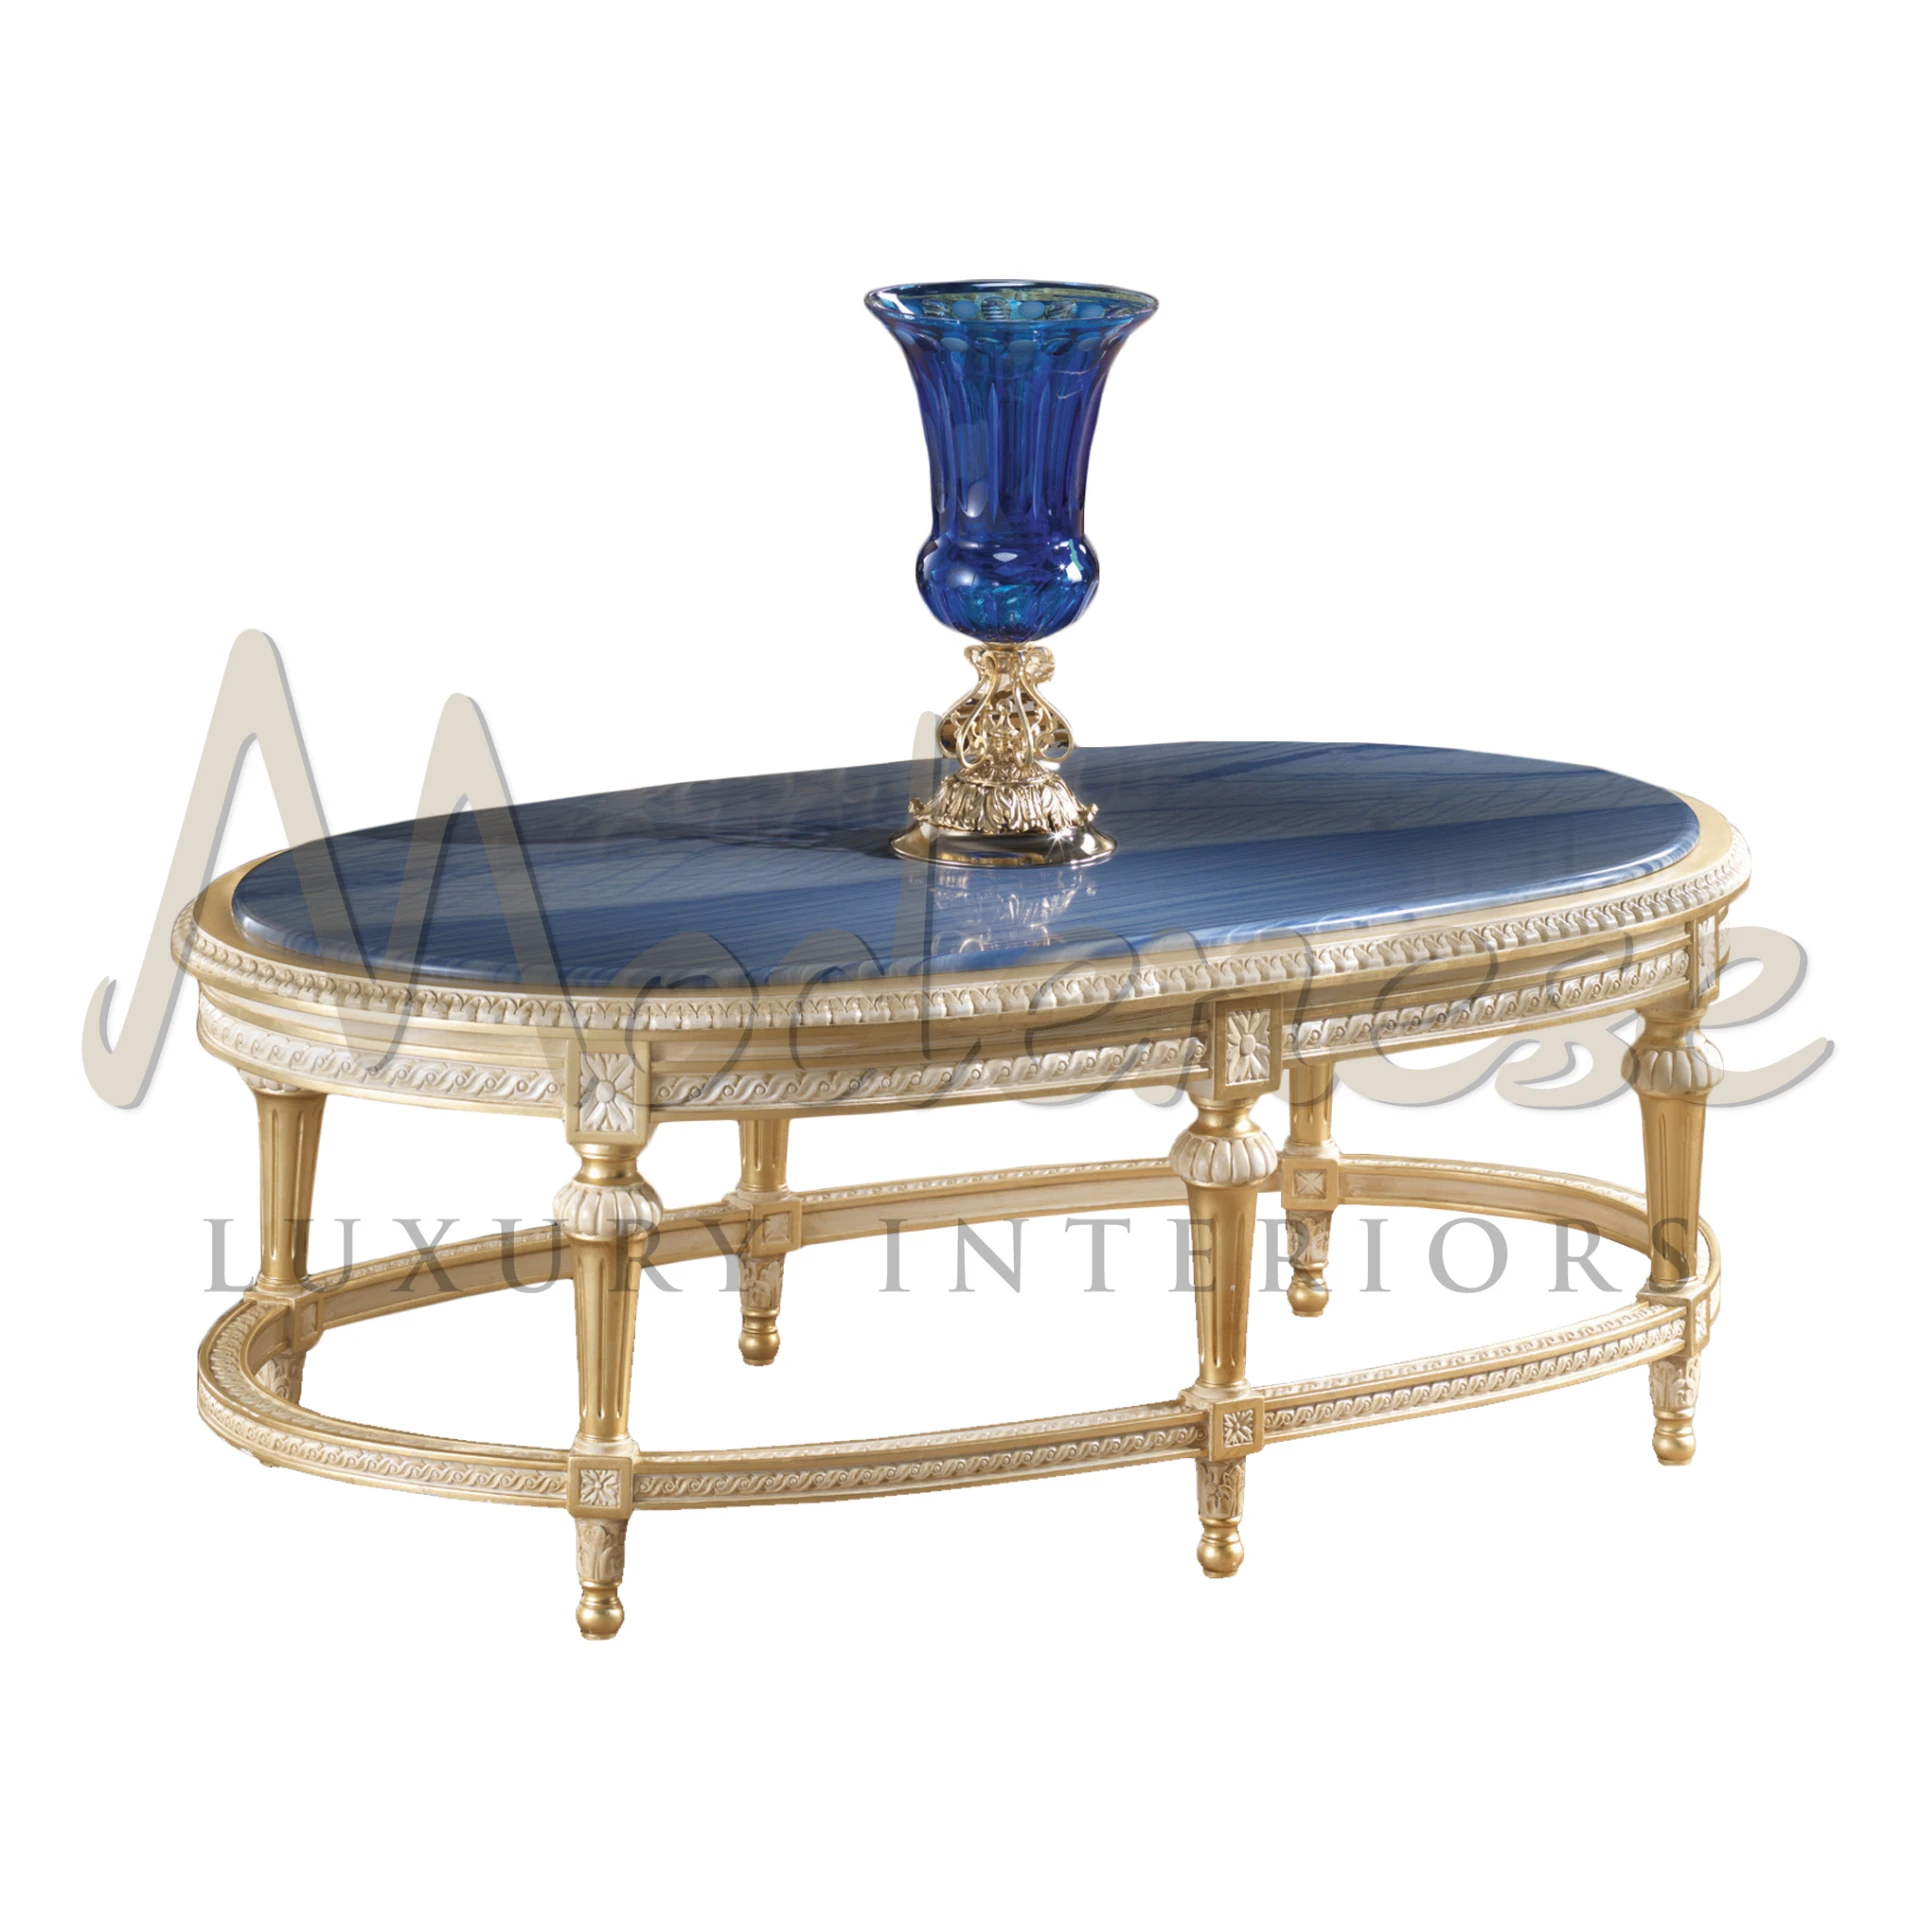 Luxurious Oval Azul Macaubas Coffee Table: A Statement of Elegance